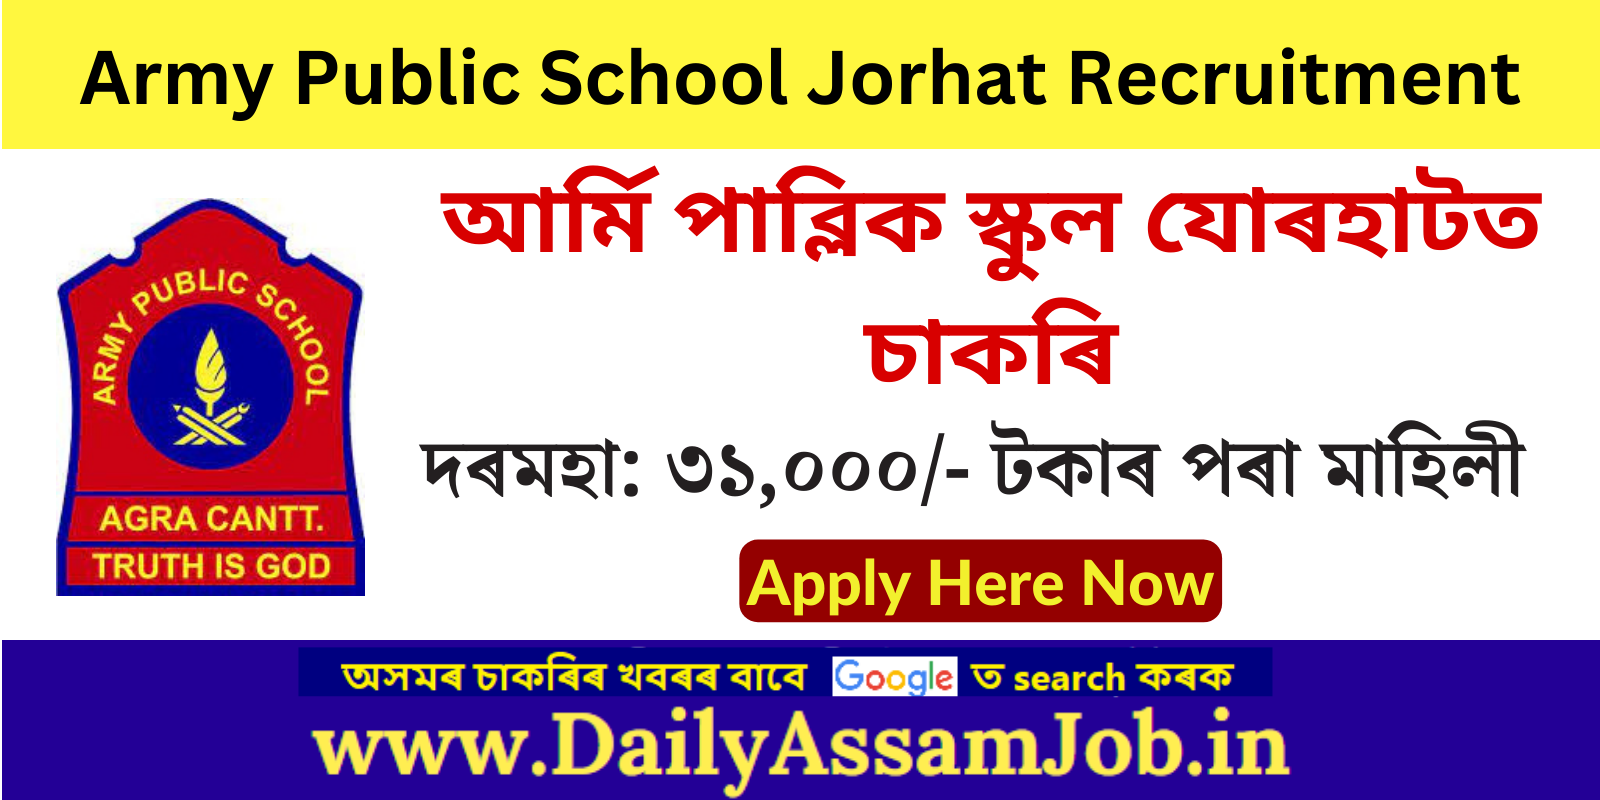 Army Public School Jorhat Recruitment for PGT-Physics Vacancy